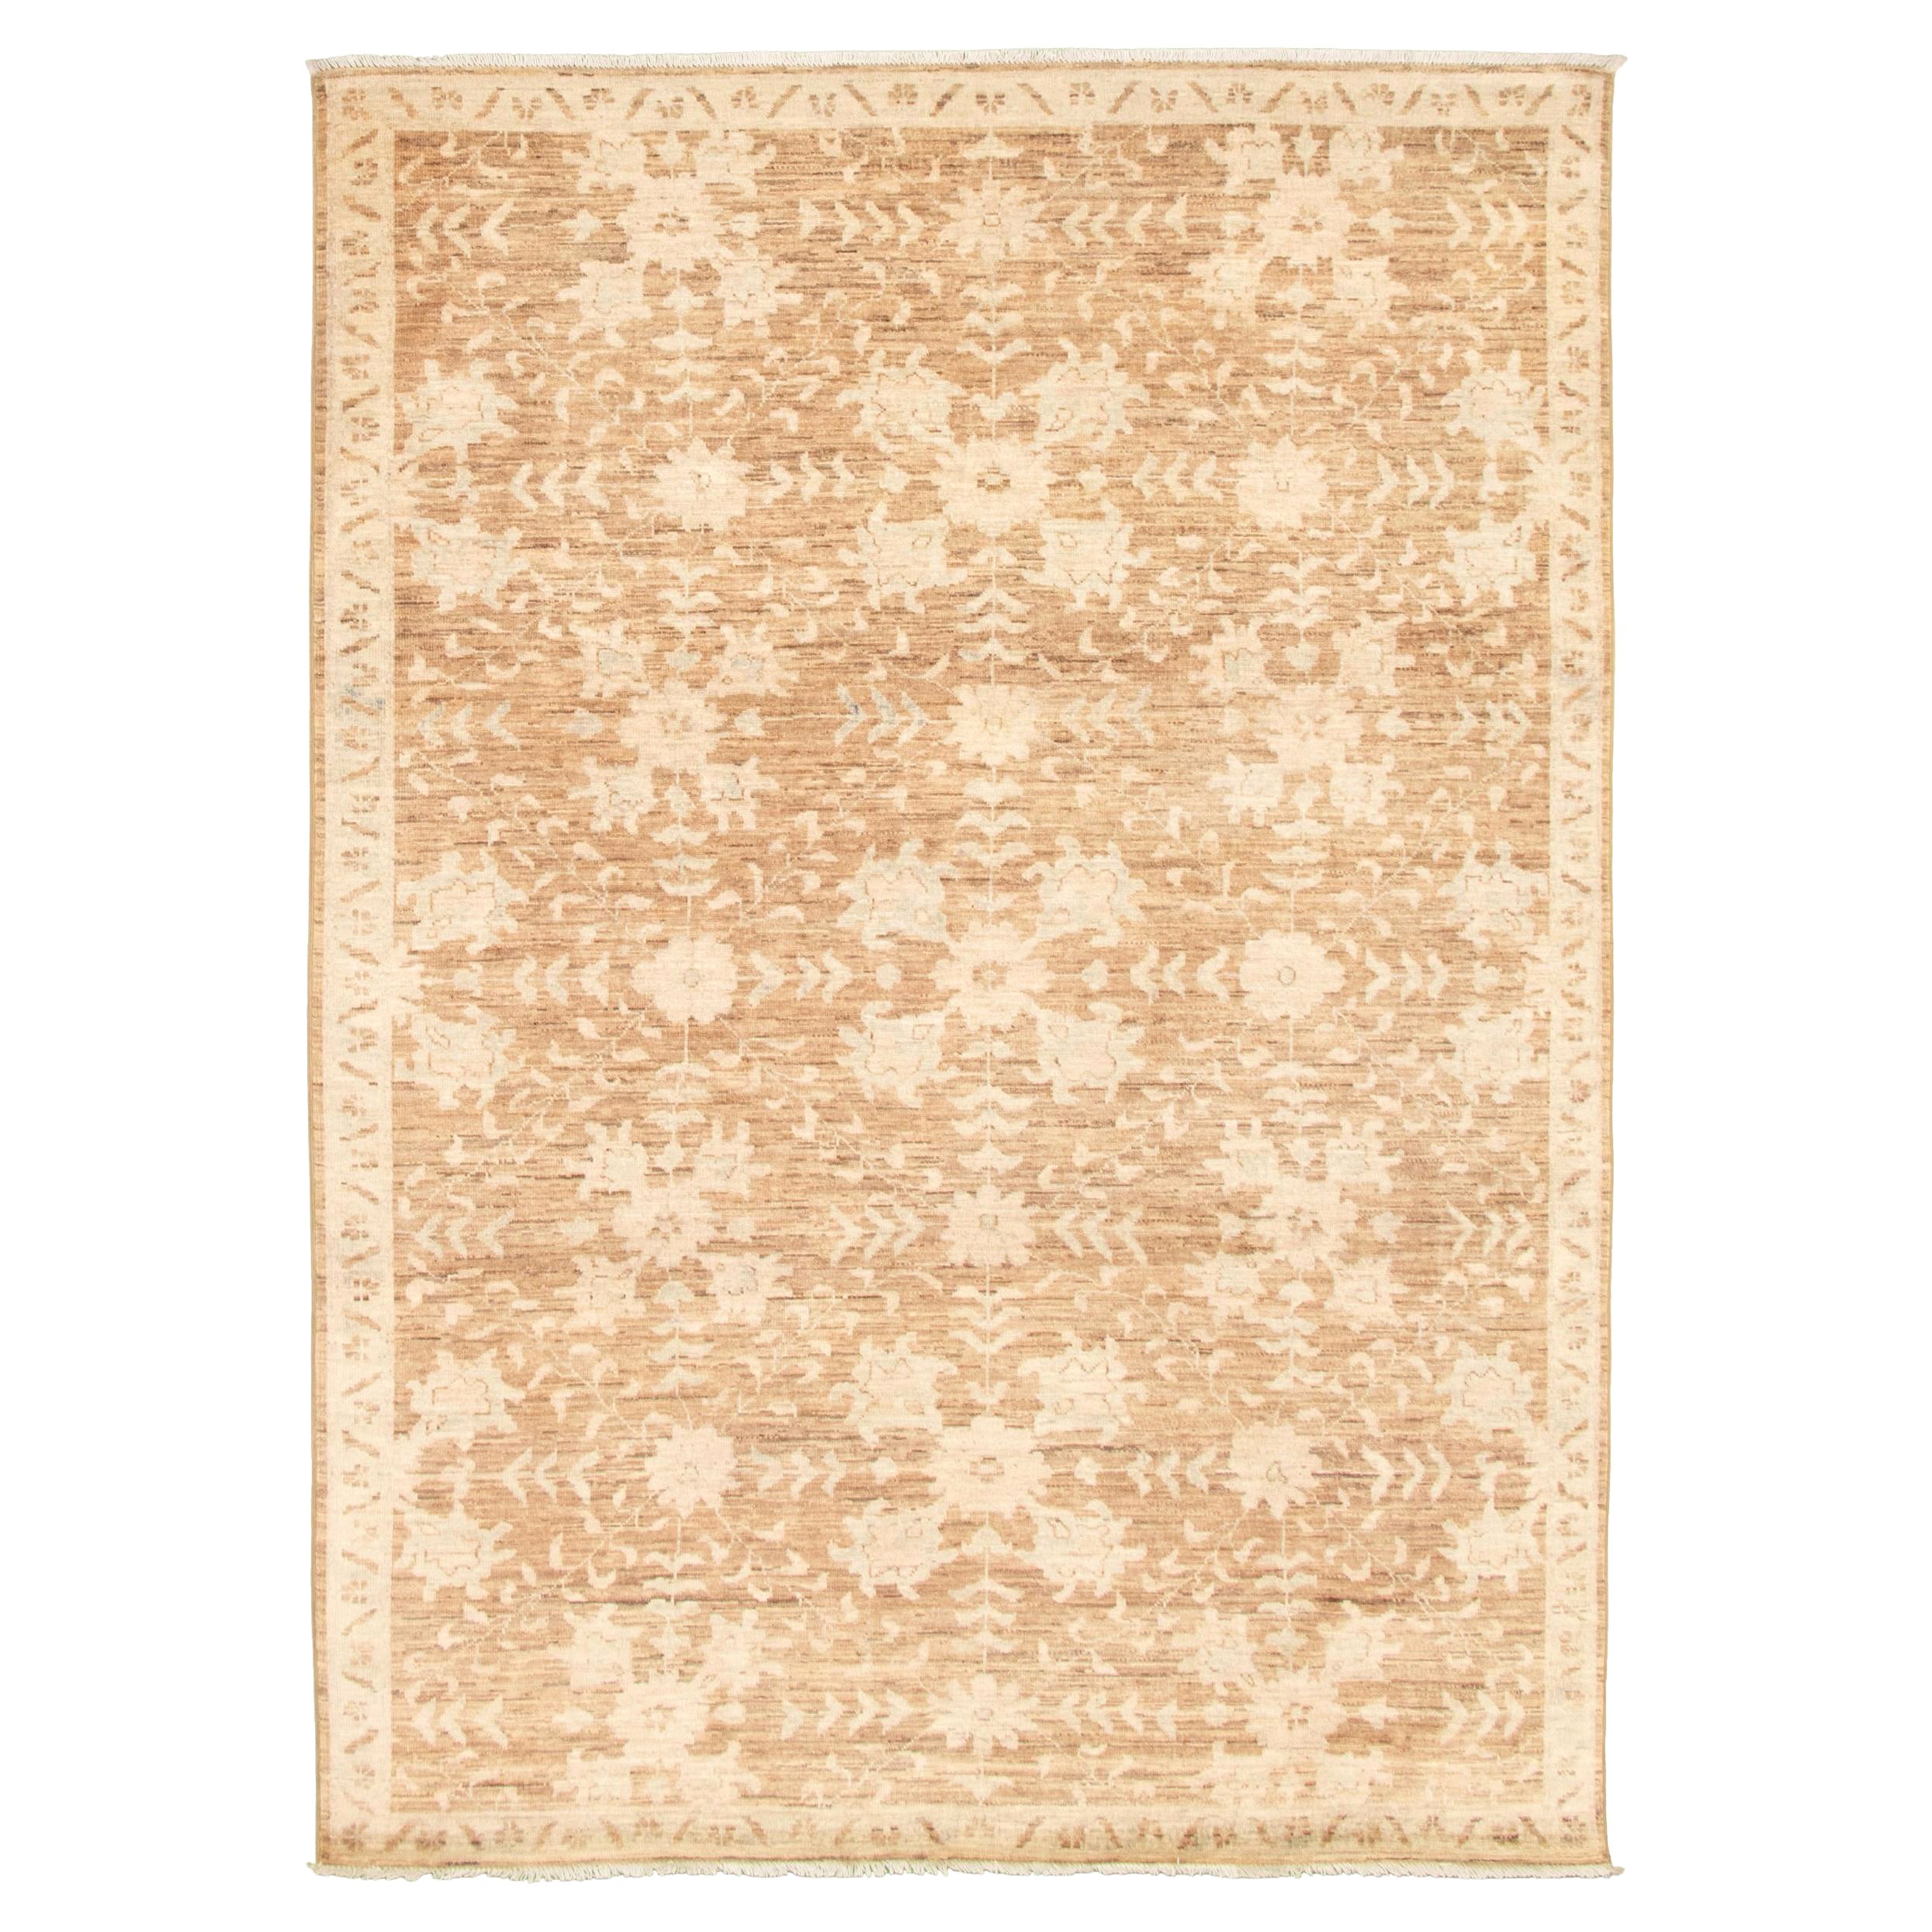 Fine Transitional Neutral Persian Oushak Carpet - 6'x9'